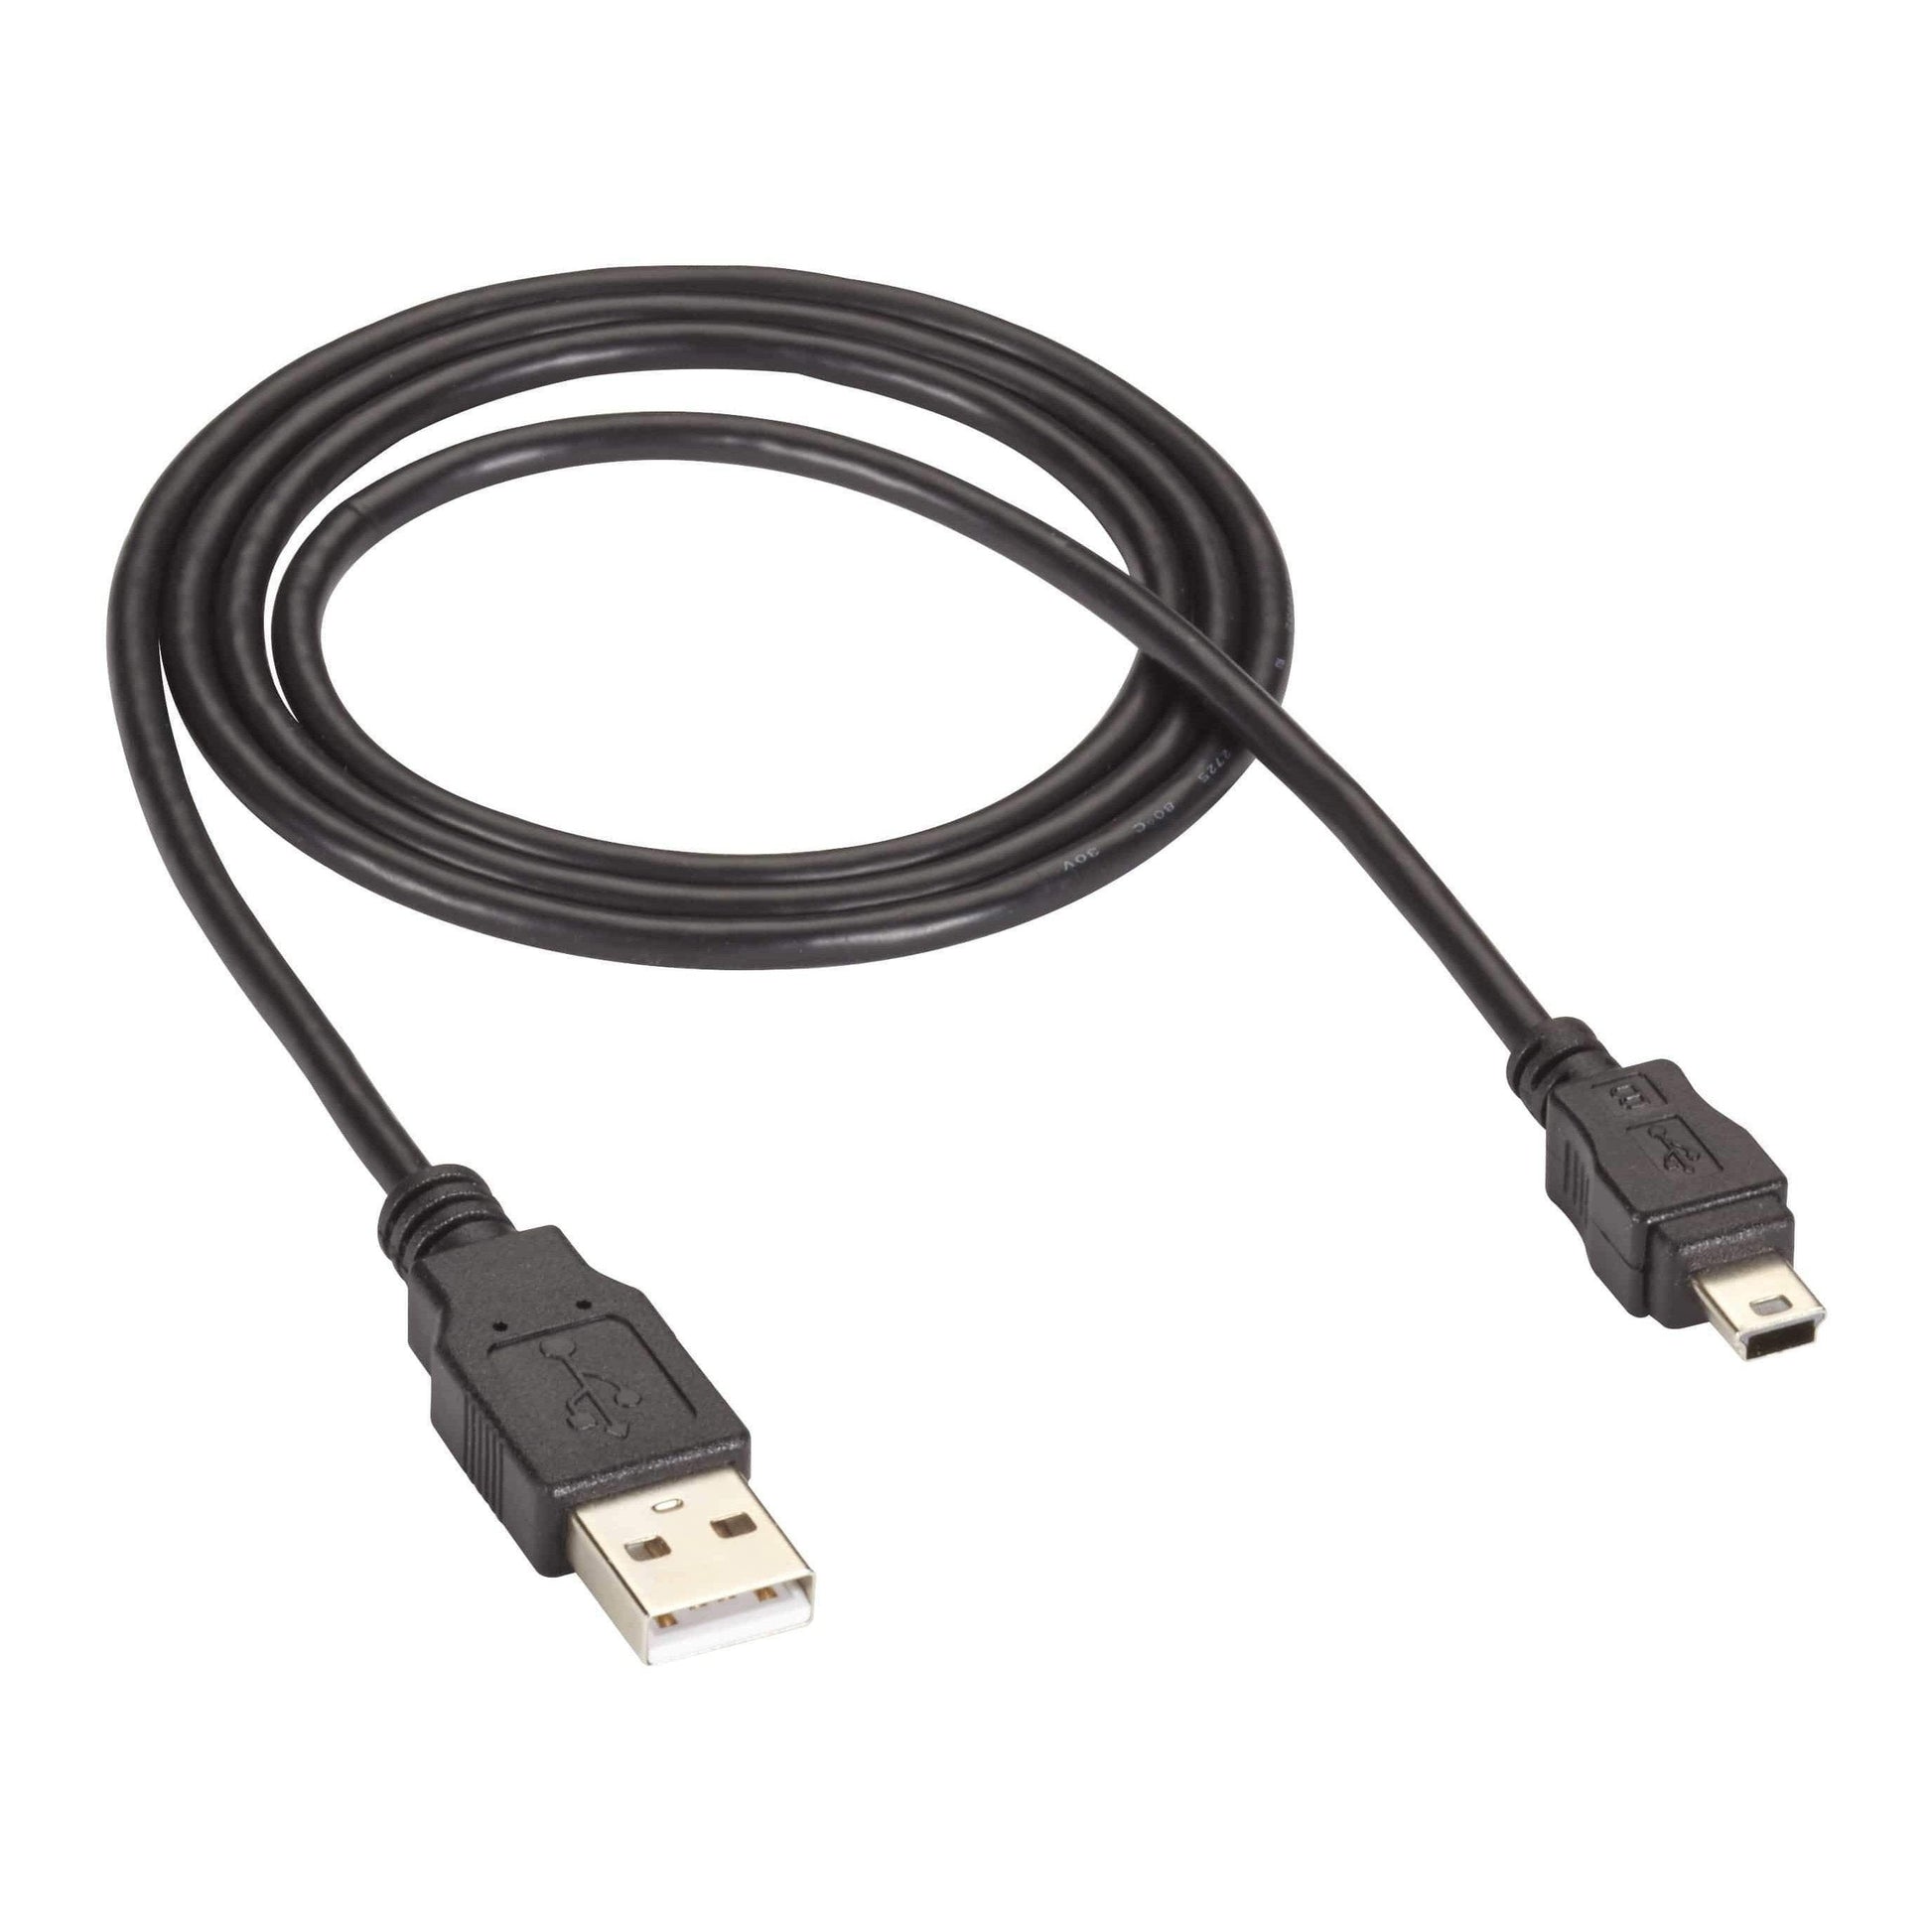 Tovaste UBC-130-L5 USB A to USB Mini B Cable - 5 Meters